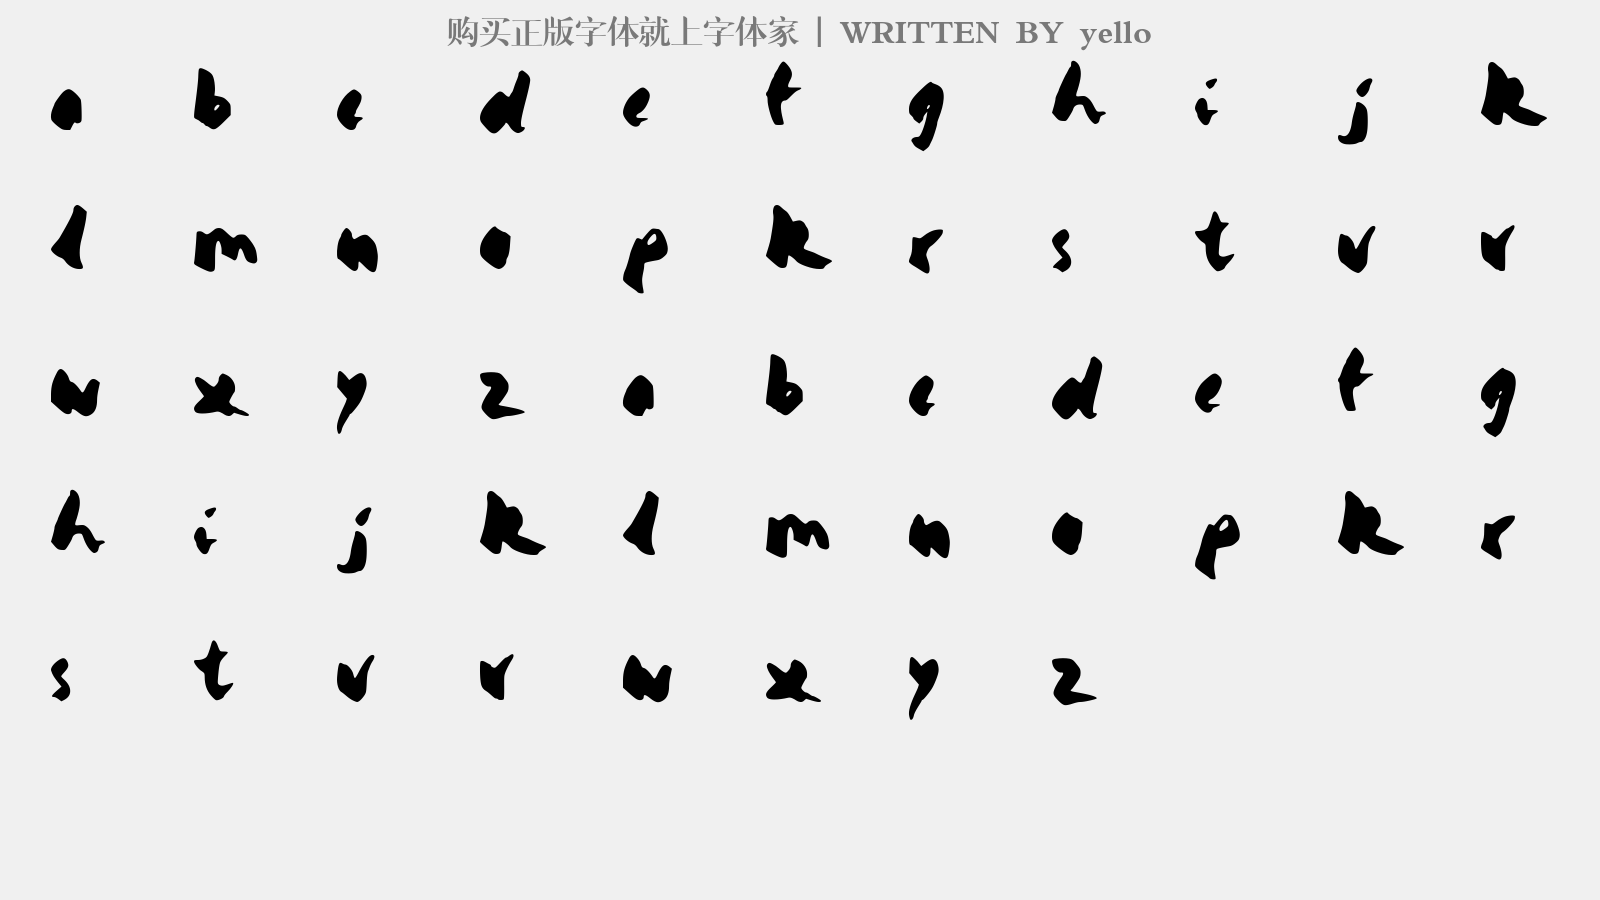 yello - 大写字母/小写字母/数字